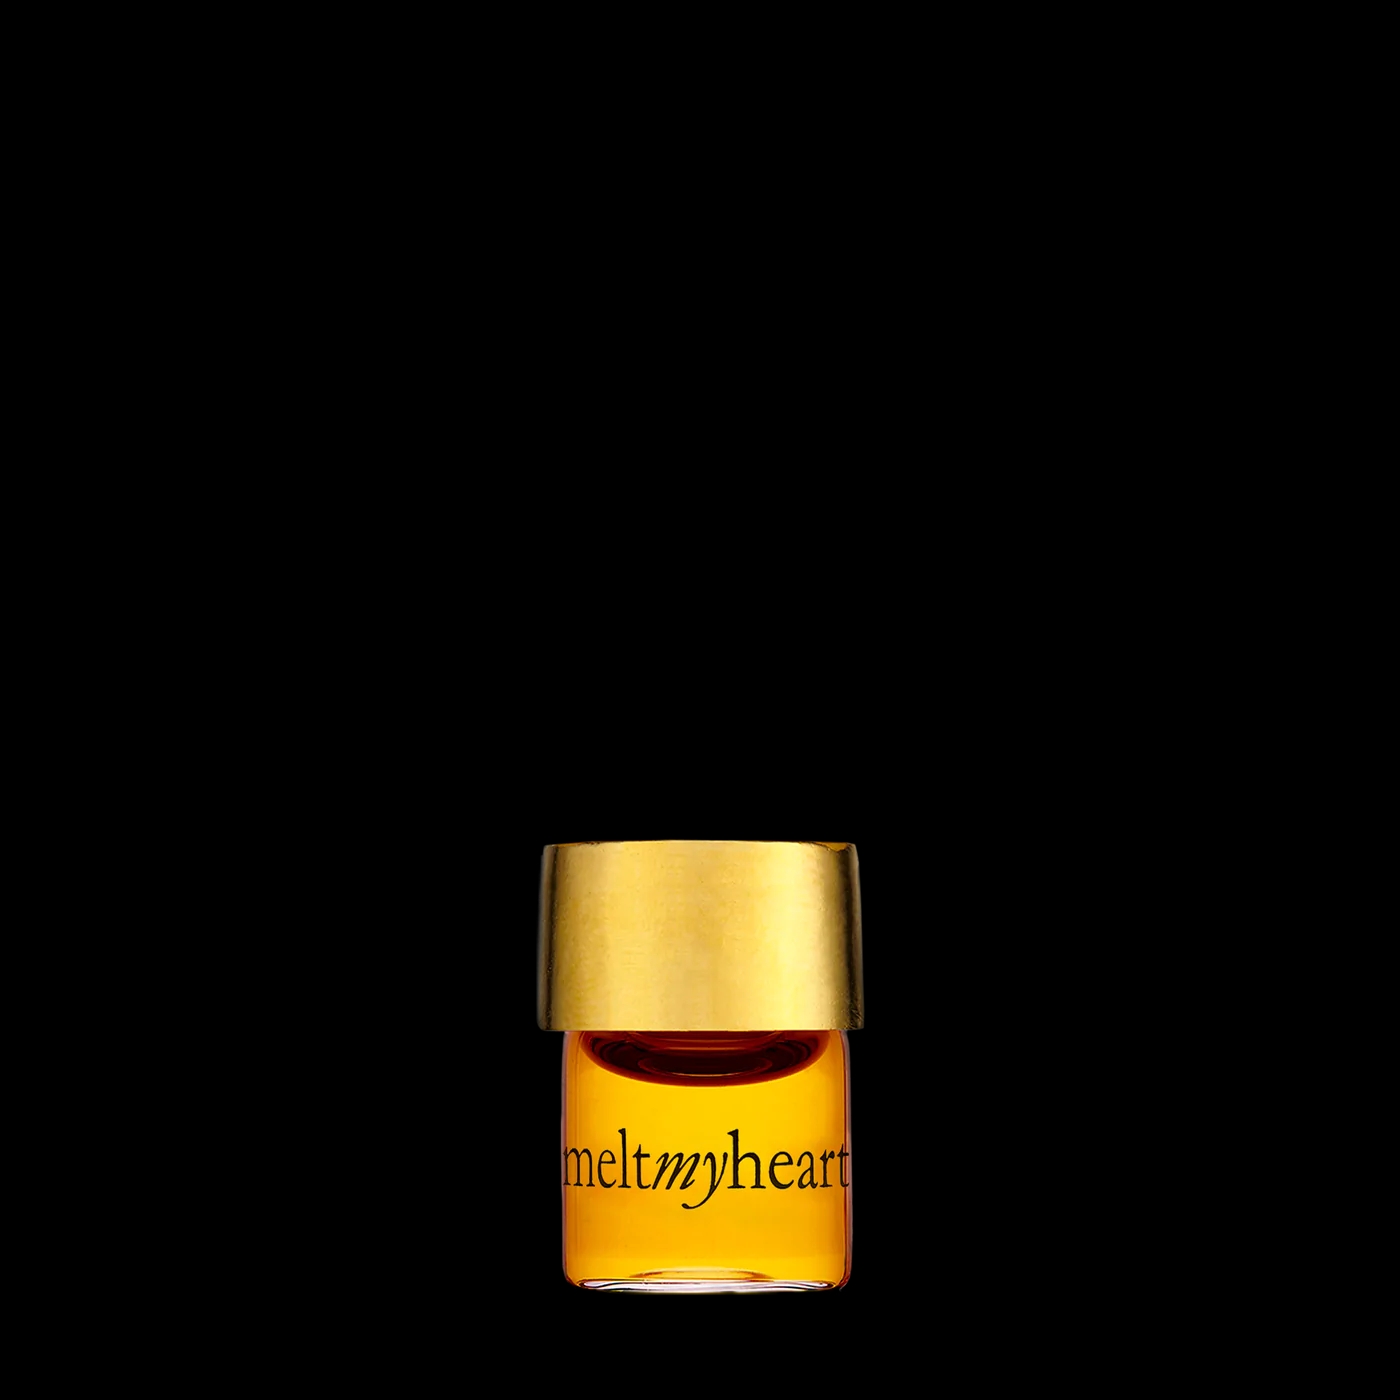 strangelove - meltmyheart pure perfume oil vials refills | Perfume Lounge